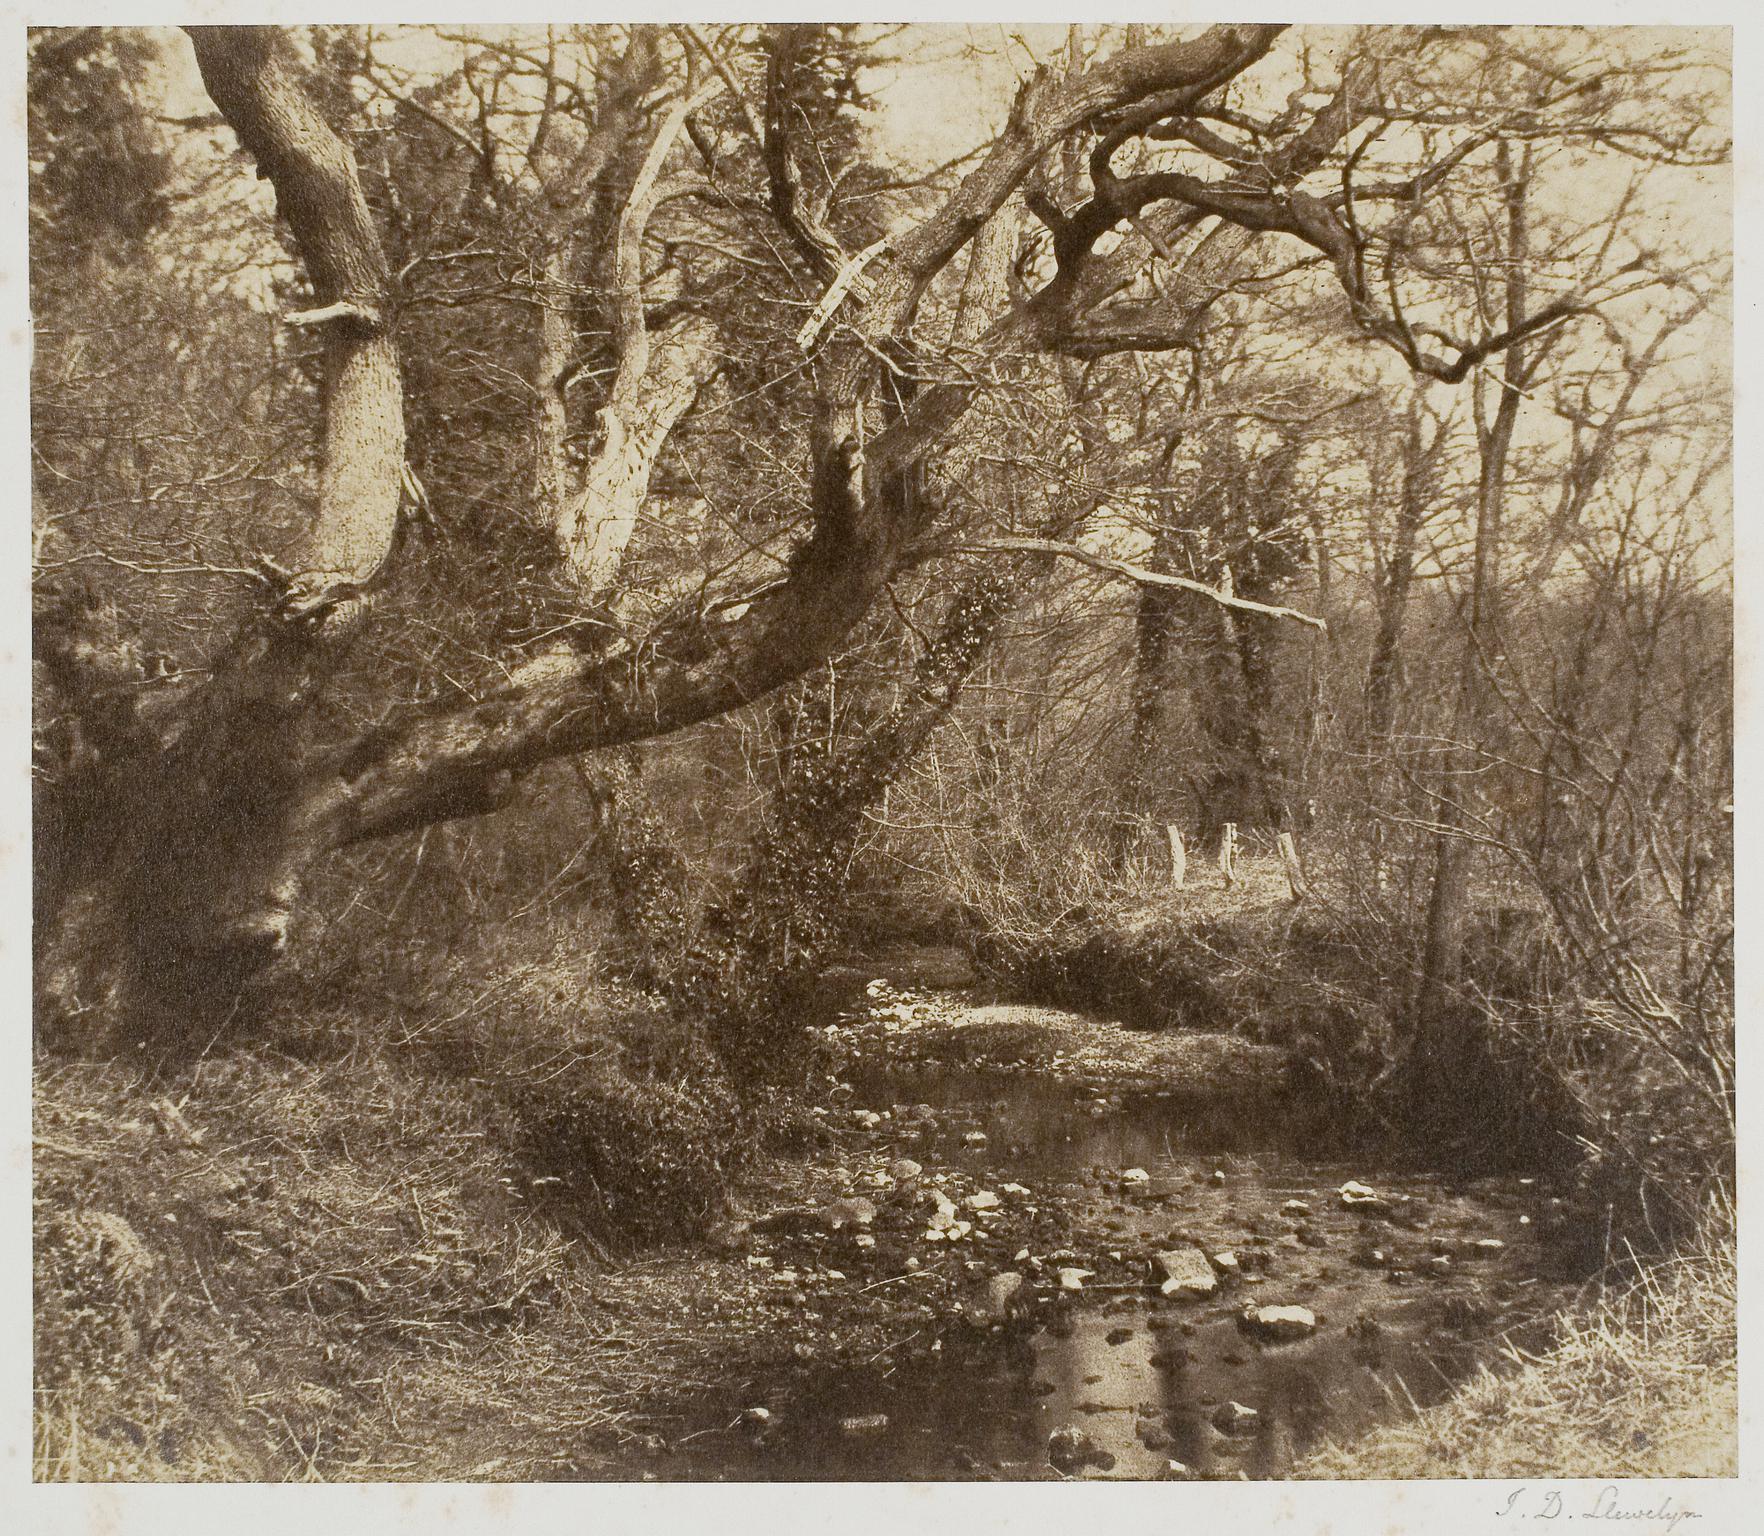 The Owl's Oak, Penllergare, photograph